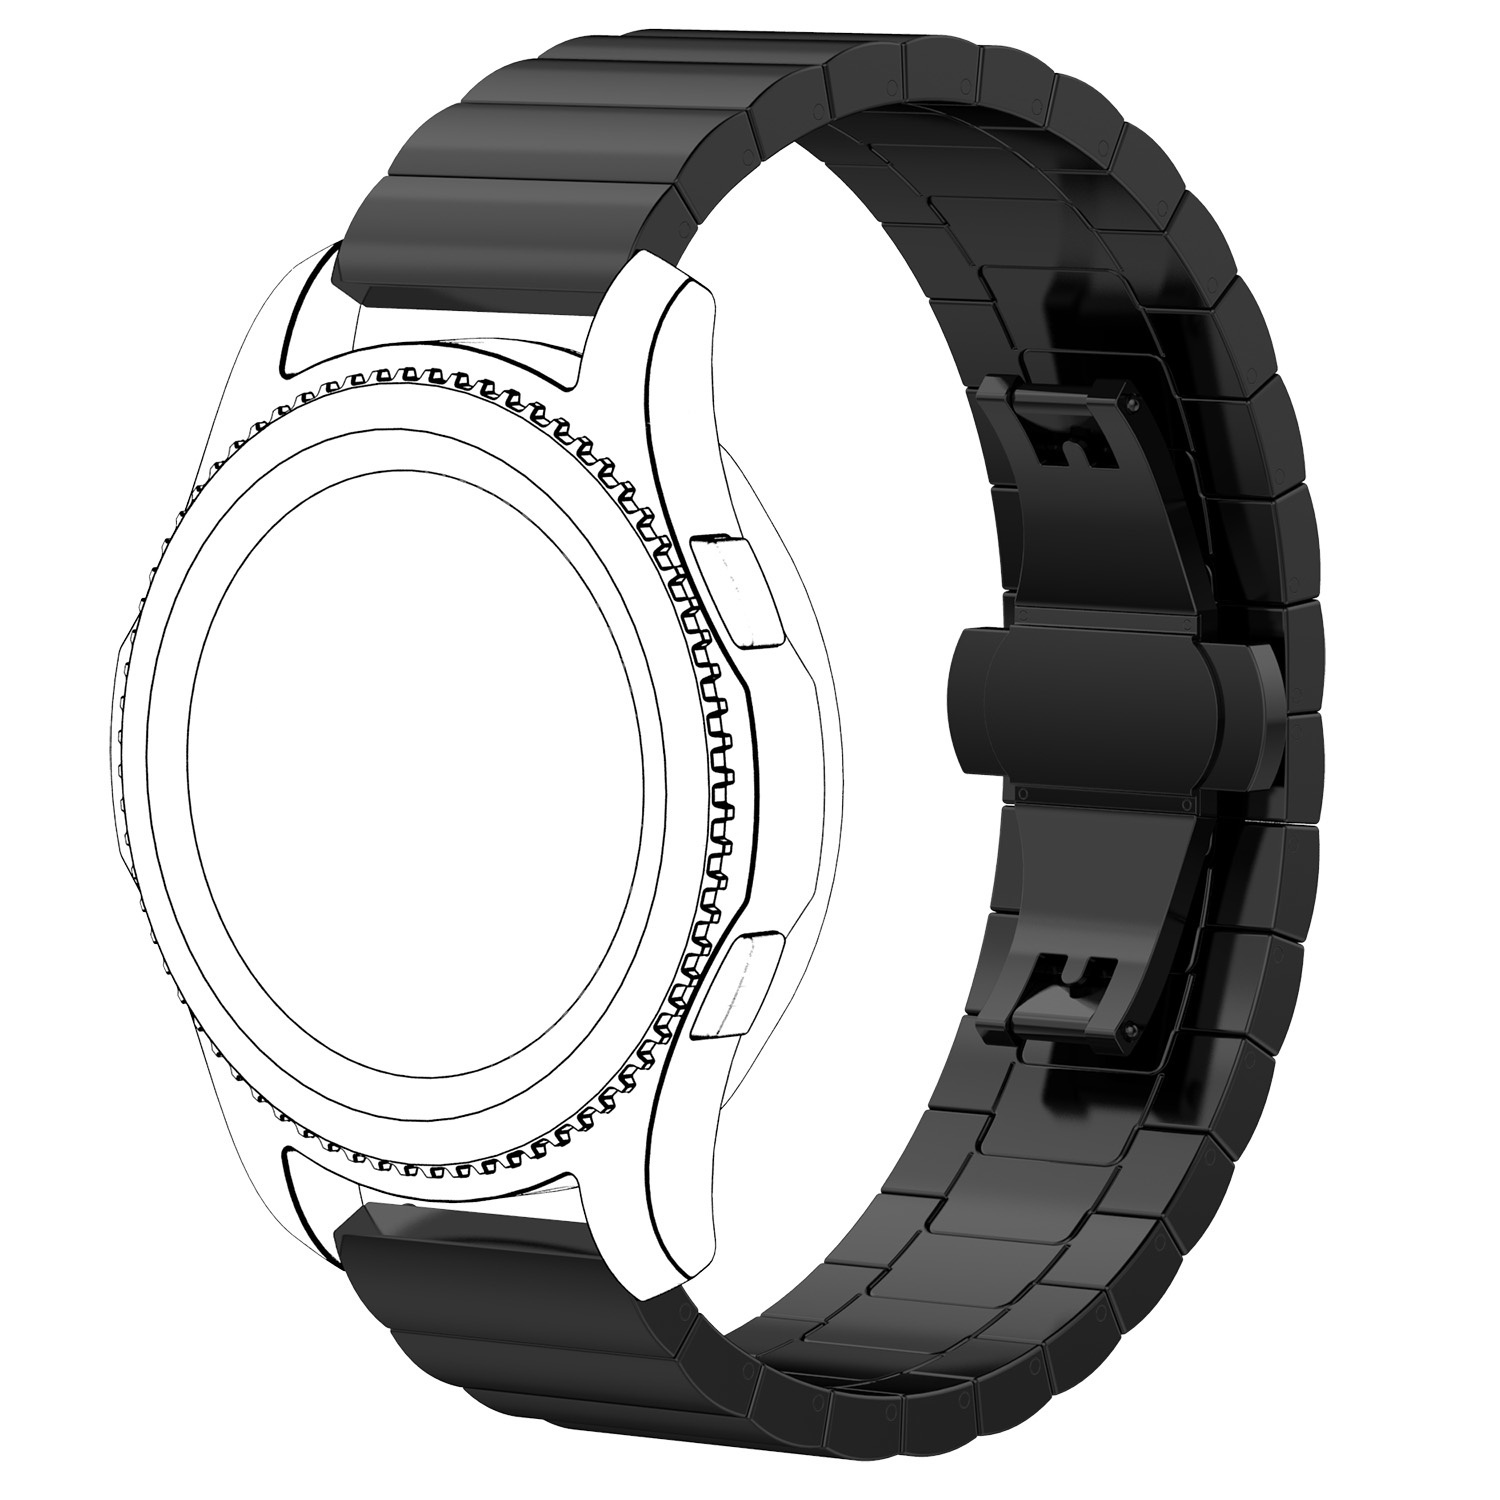 Samsung Galaxy Watch Steel Link Strap - Black